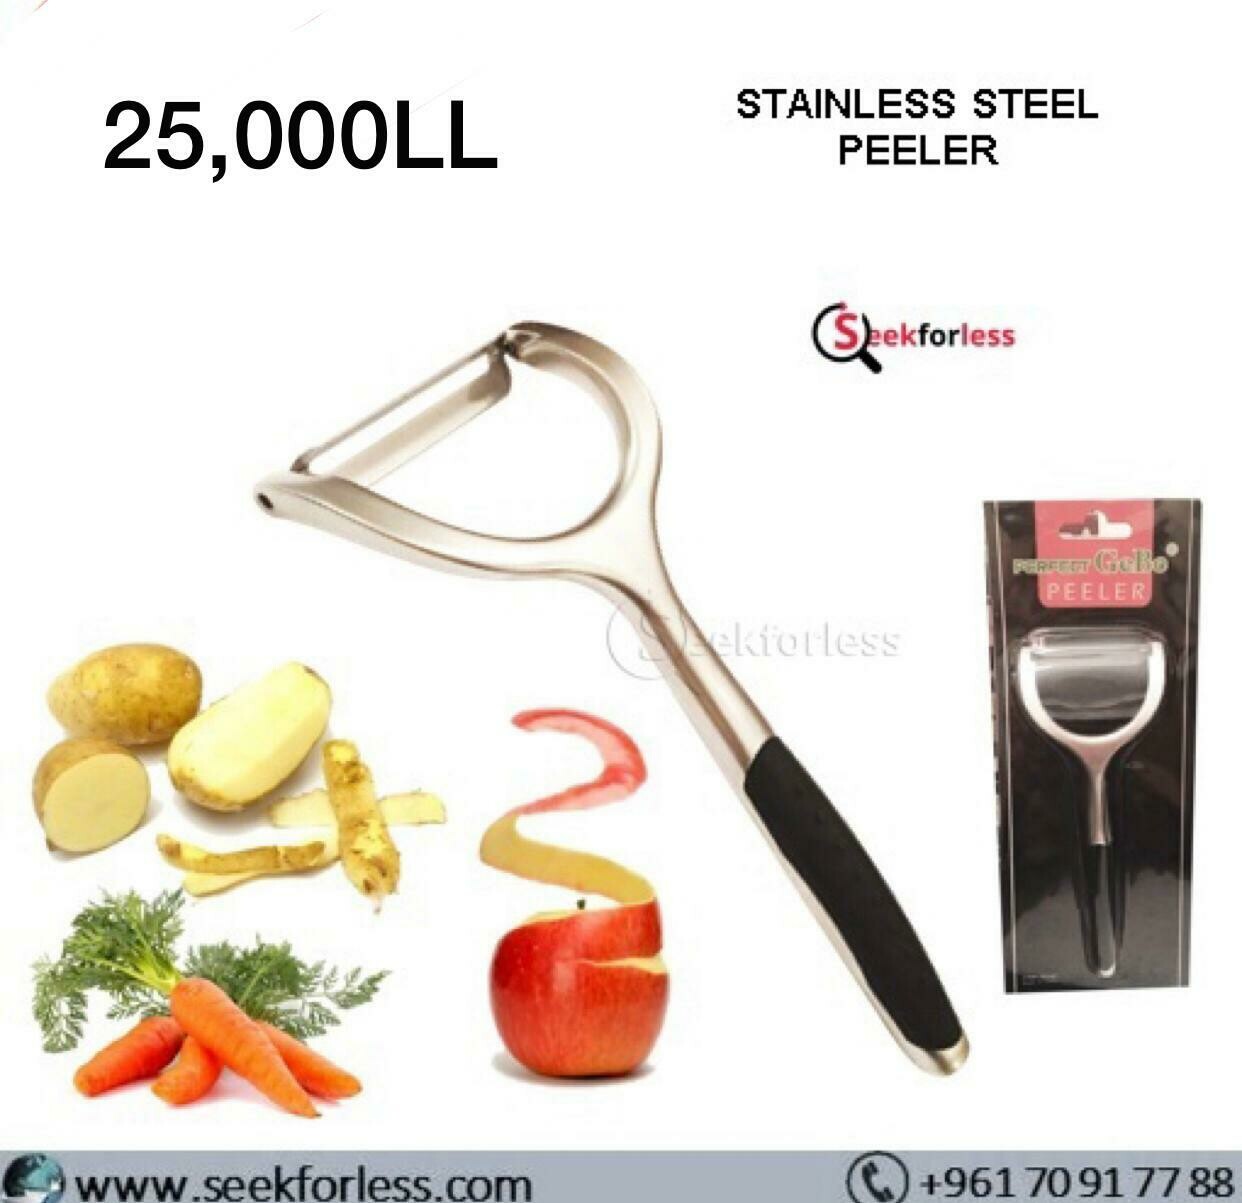 Stainless Steel Peeler